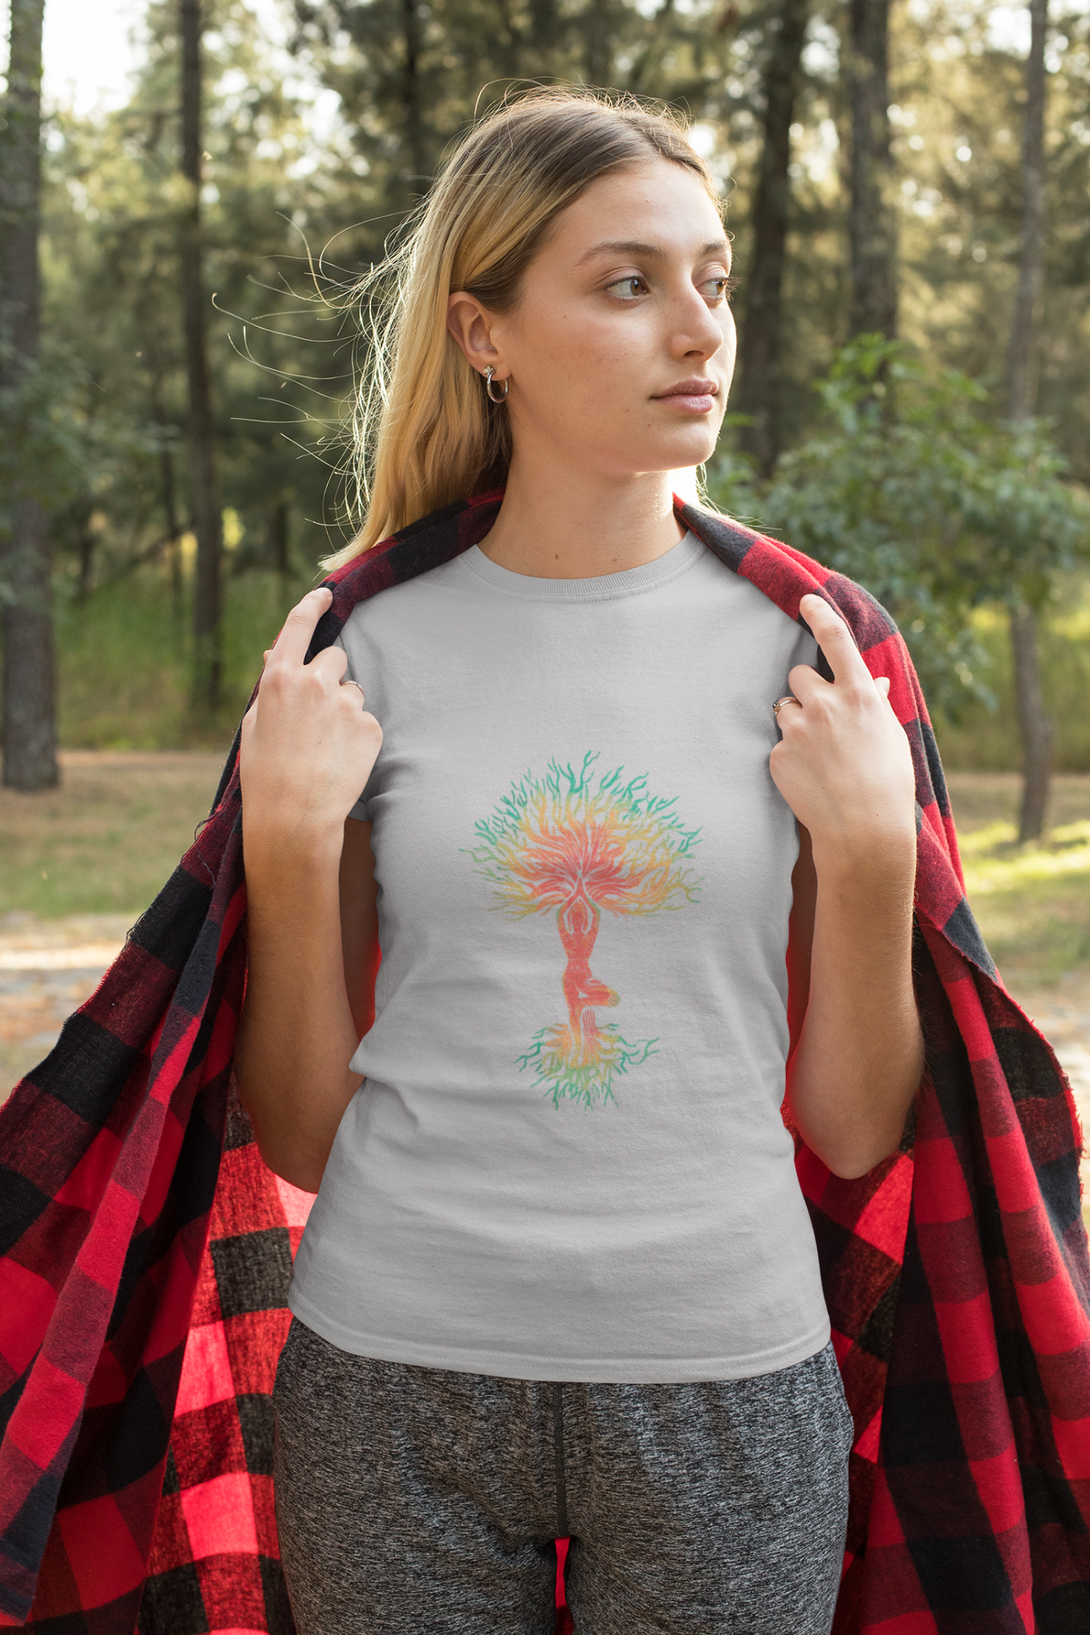 Yoga Tree Printed T-Shirt For Women - WowWaves - 2